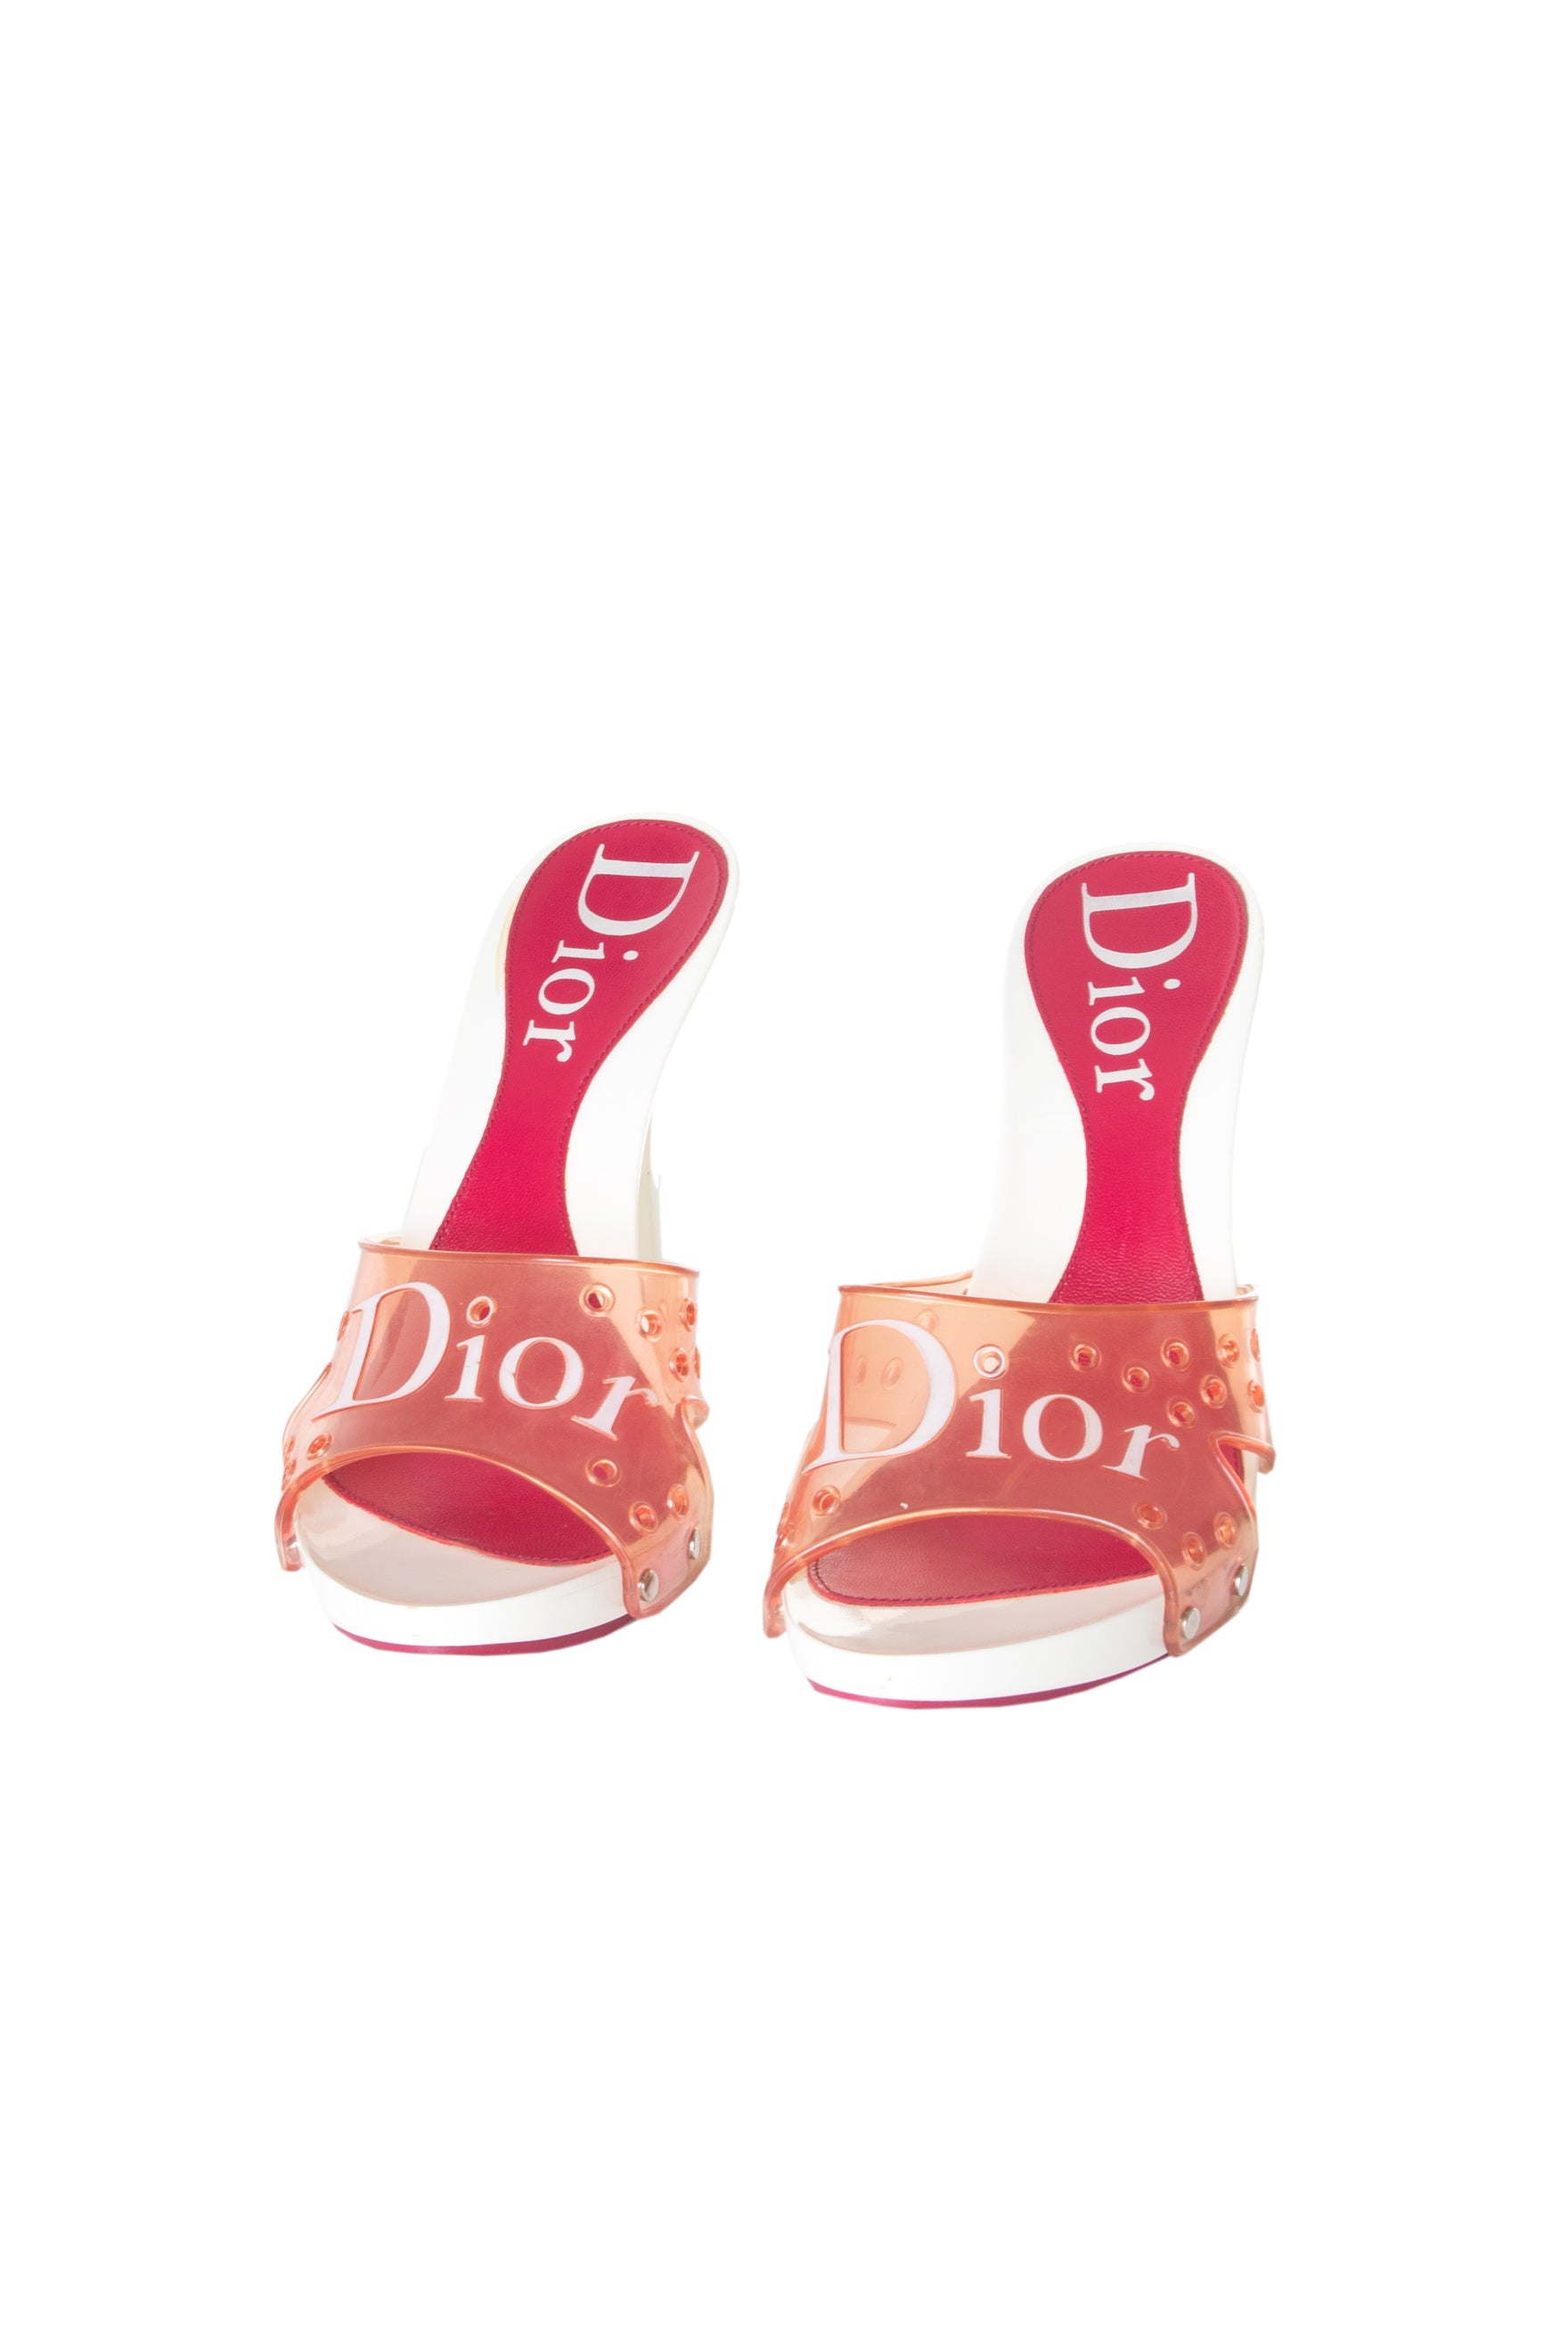 dior jelly heels